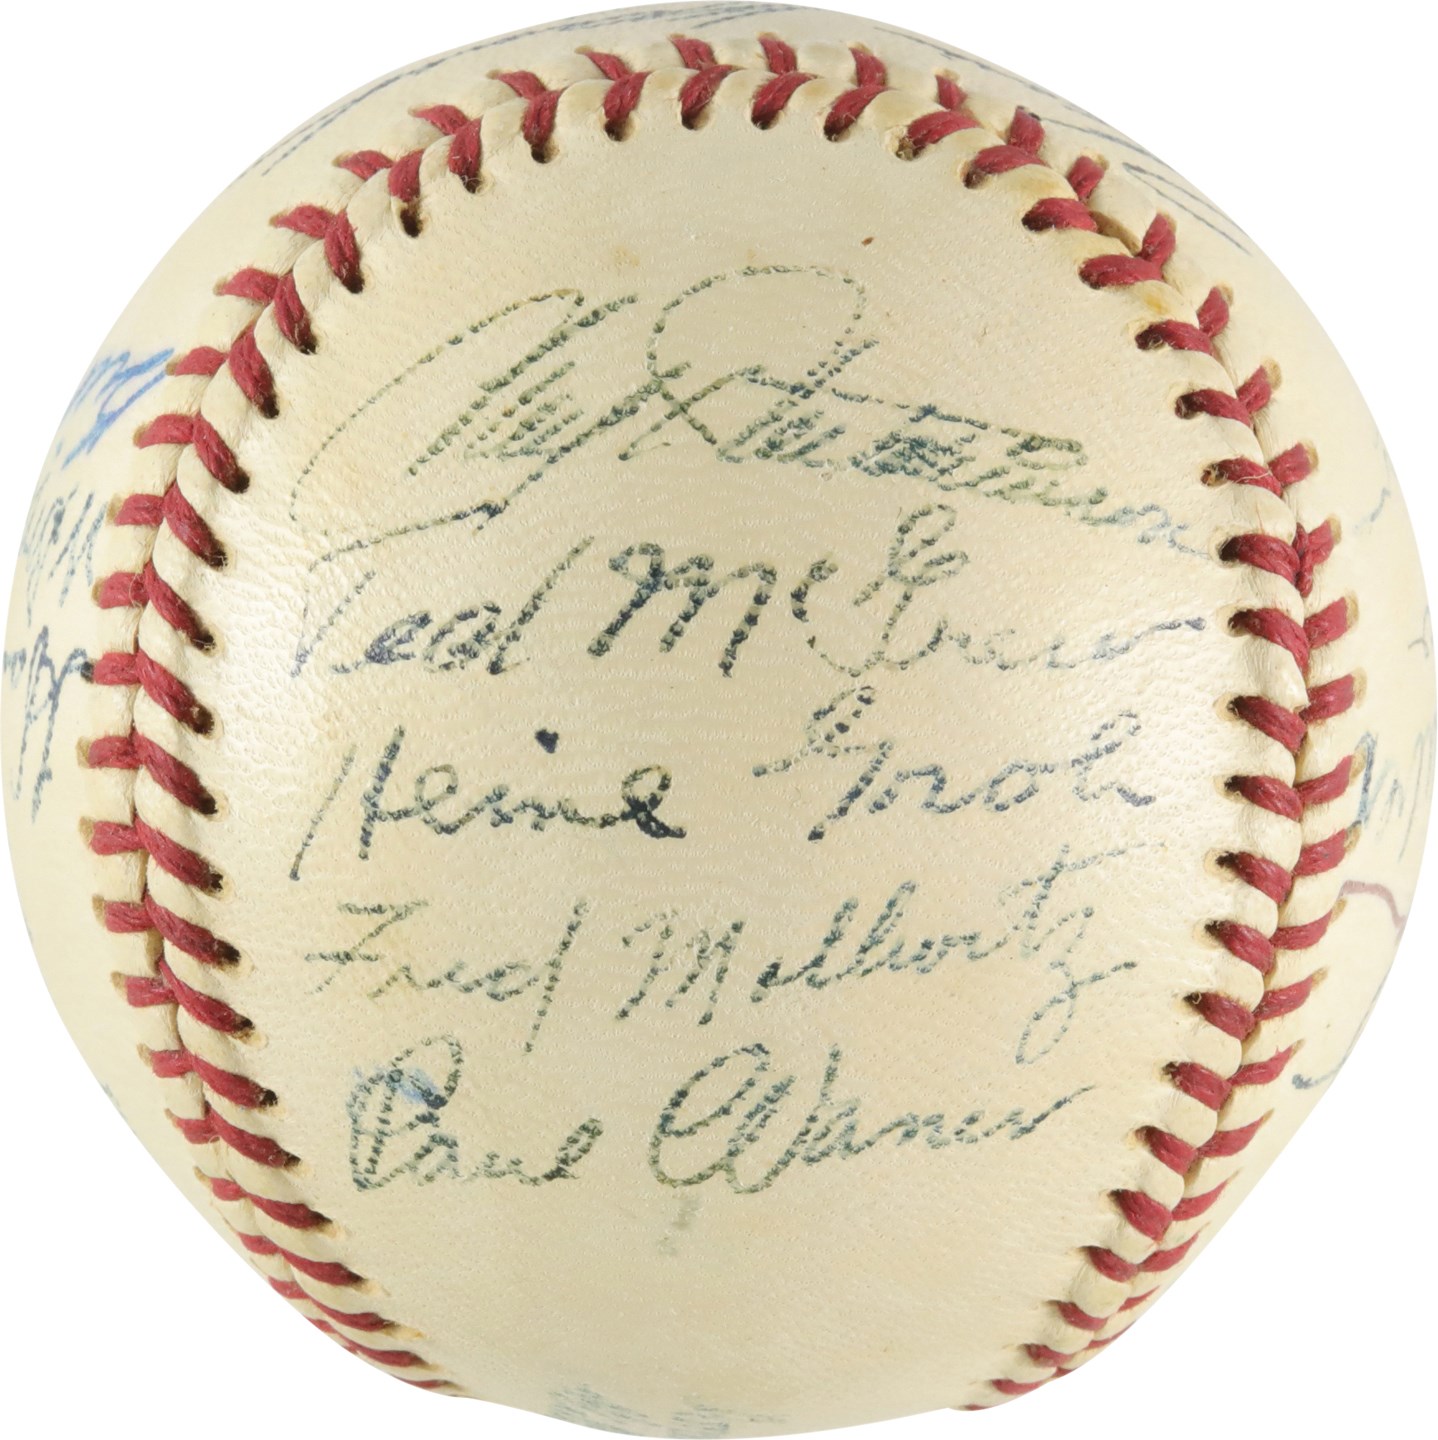 Baseball Autographs - High Grade 1950s Hall of Famers and Stars Signed Baseball w/Paul Waner